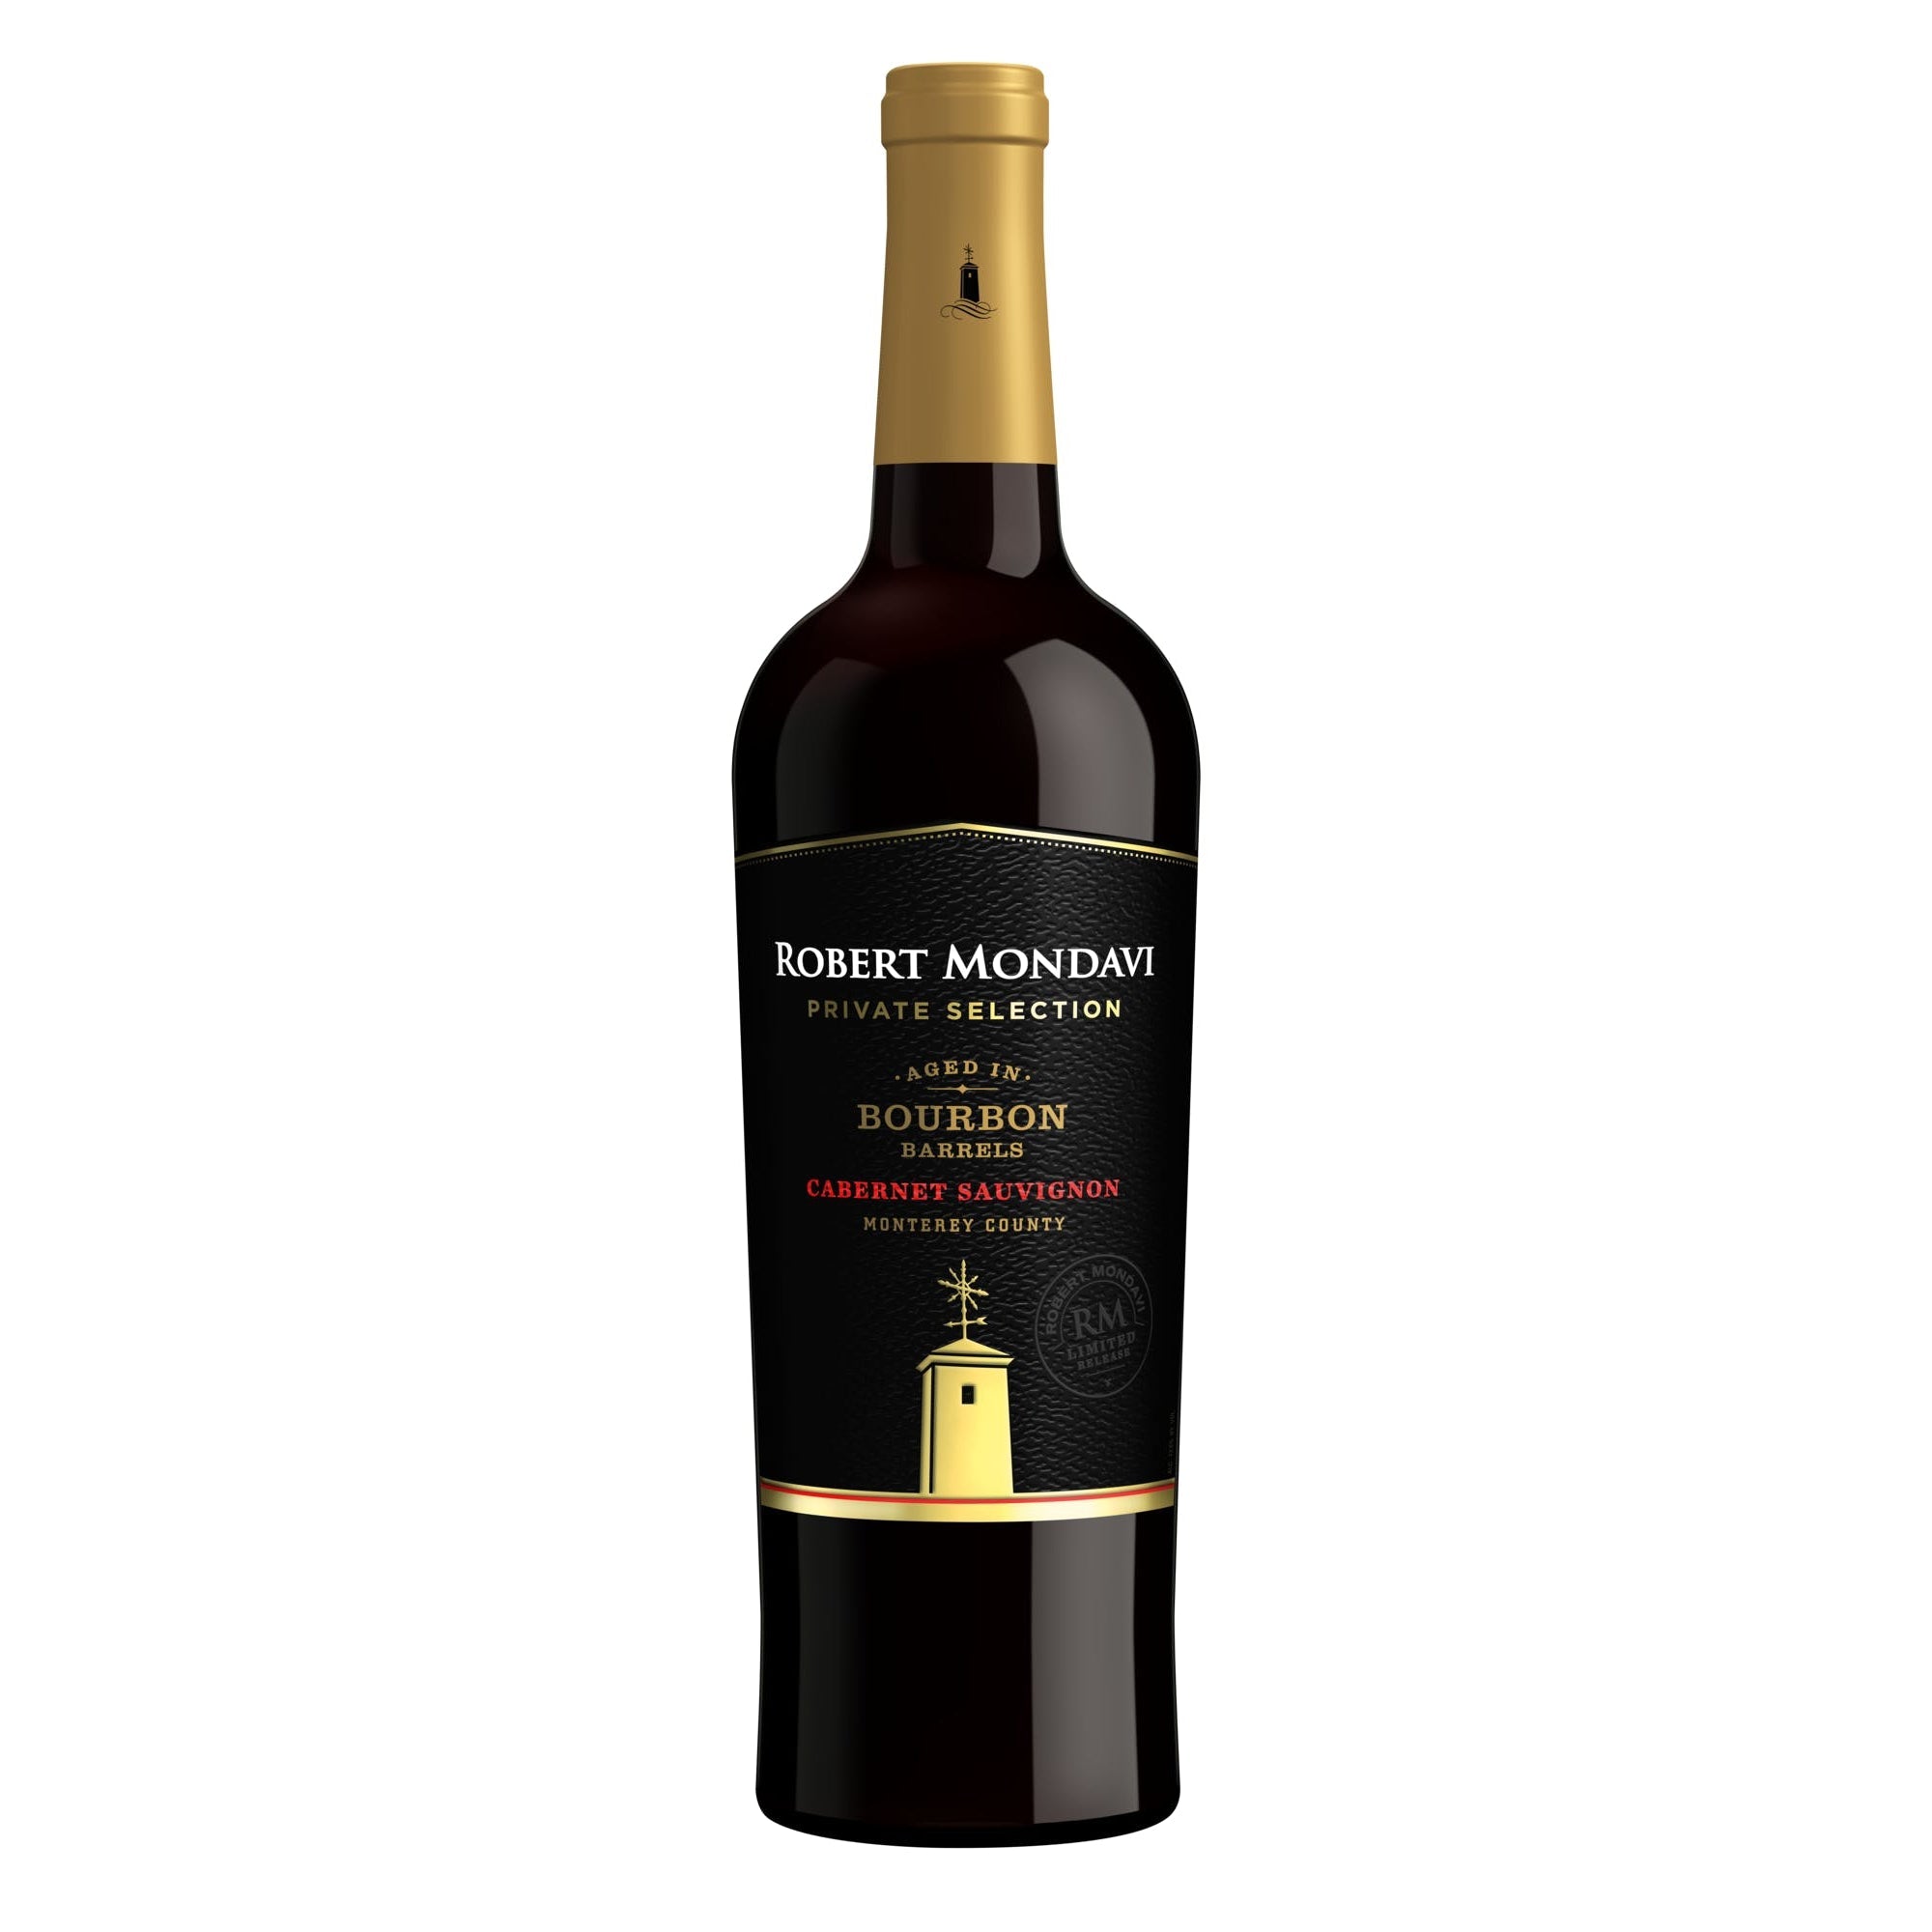 Robert Mondavi Private Selection Bourbon Barrel Cabernet Sauvignon 2019 750ml